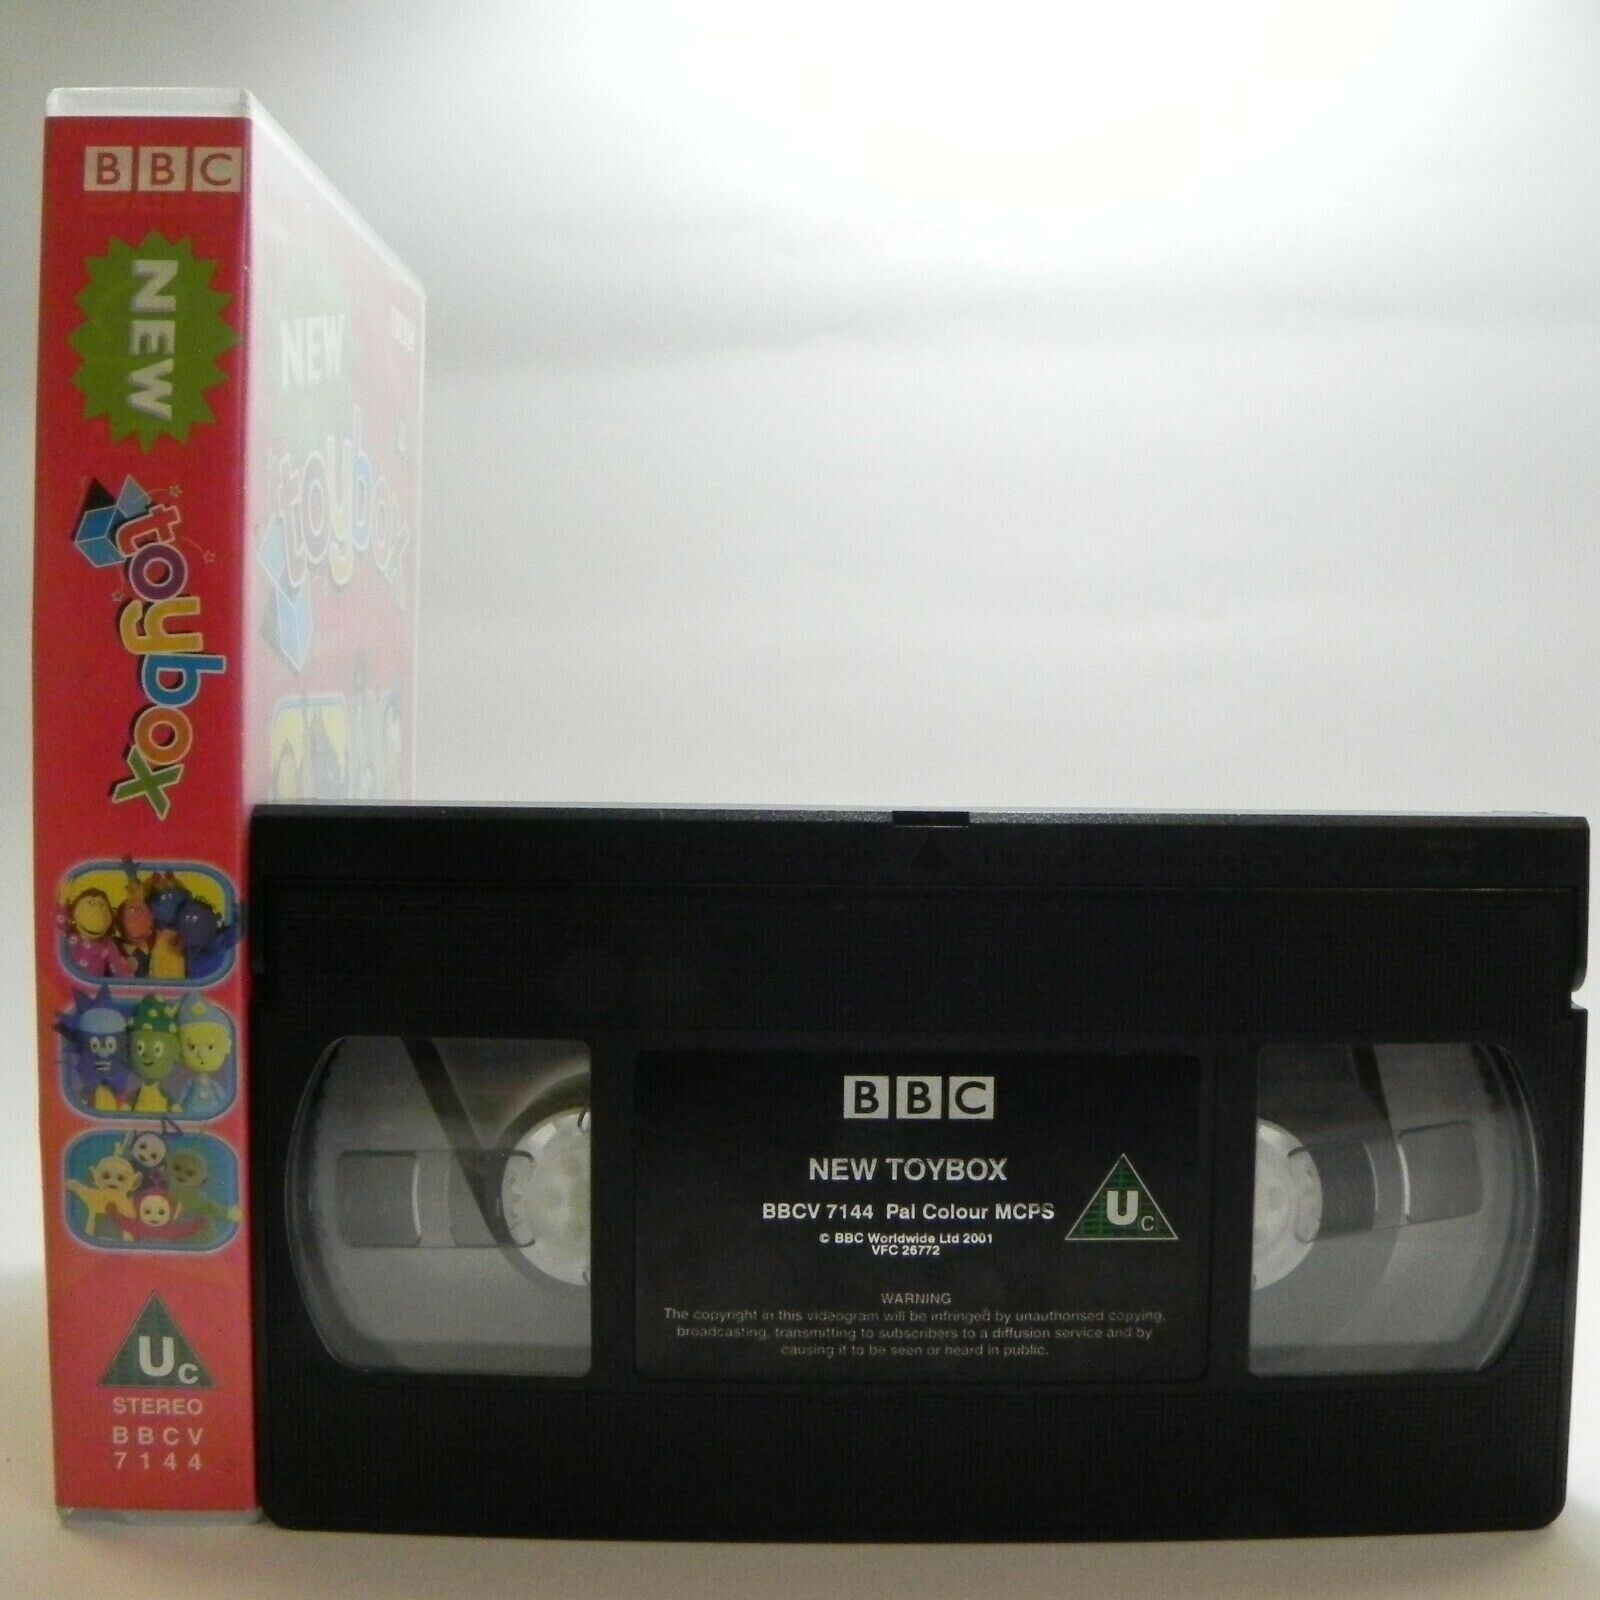 New Toybox: BBC Favourites - Teletubbies - Fireman Sam - Postman Pat - Pal VHS-